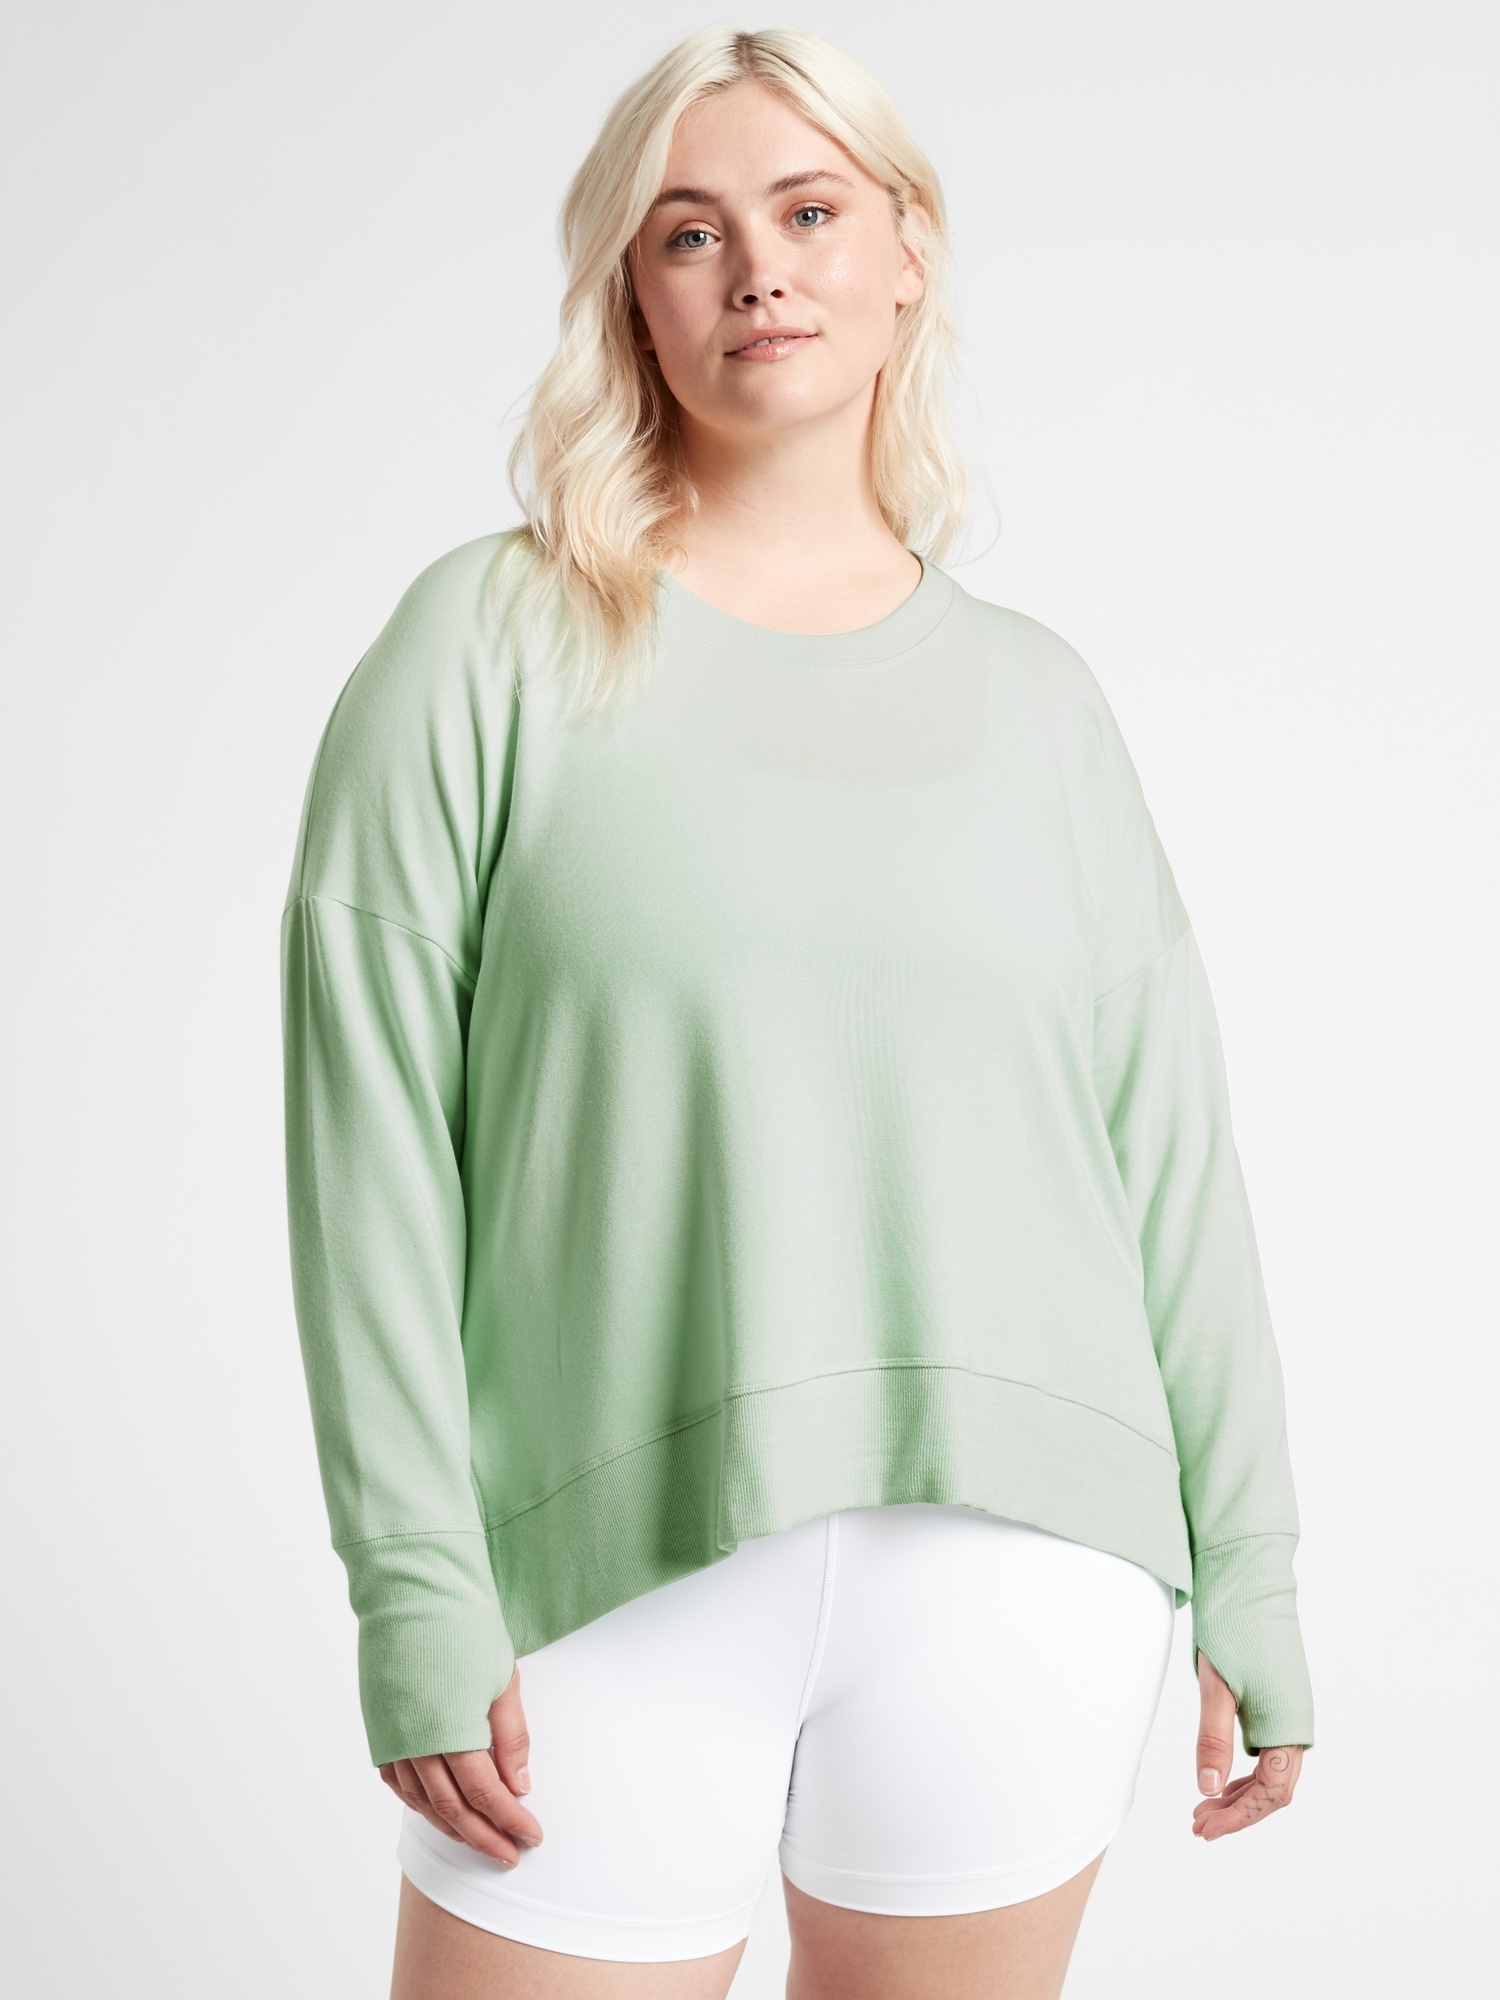 Coaster Luxe Sweatshirt | Athleta